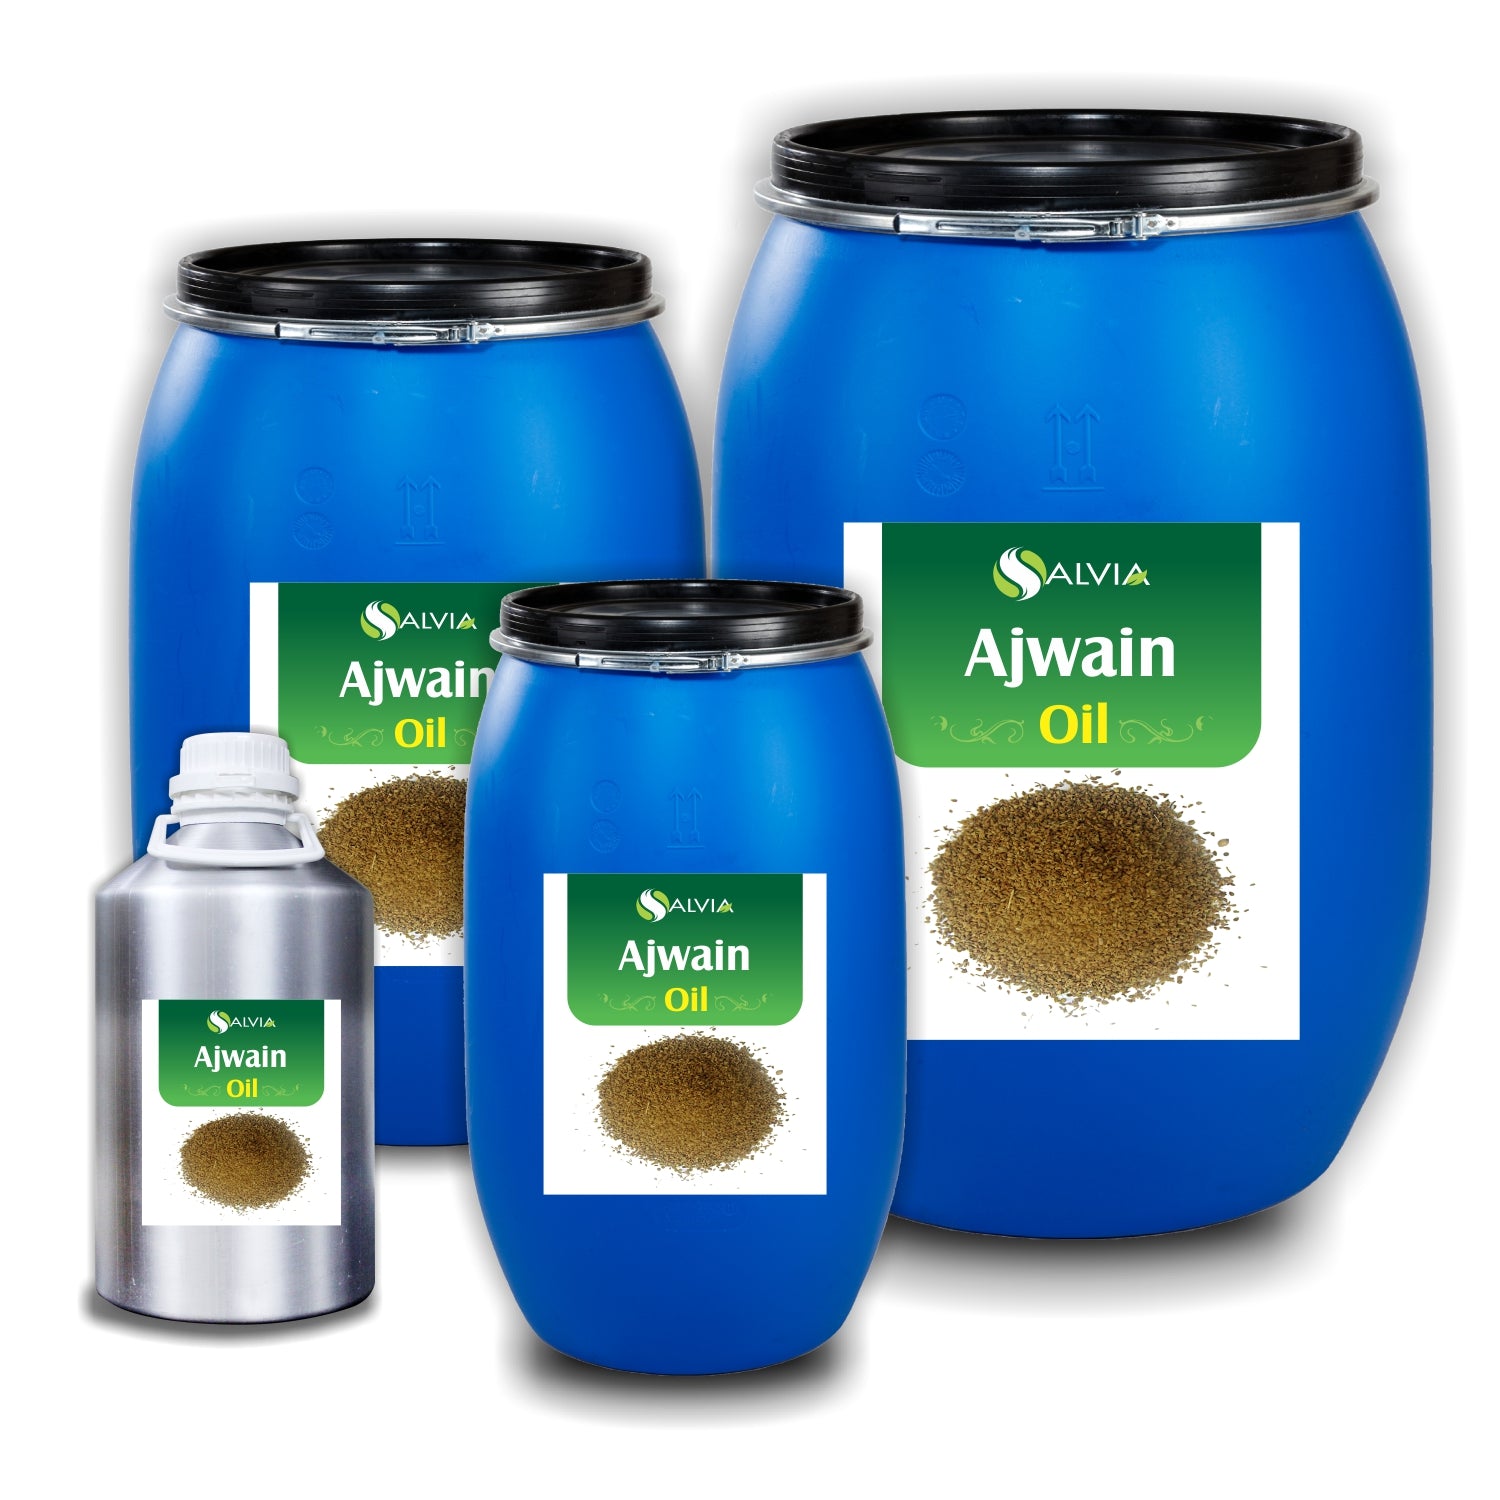 Salvia Natural Essential Oils 10kg Ajwain Oil (Trachyspermumammi) 100% Natural Essential Oil Therapeutic Grade